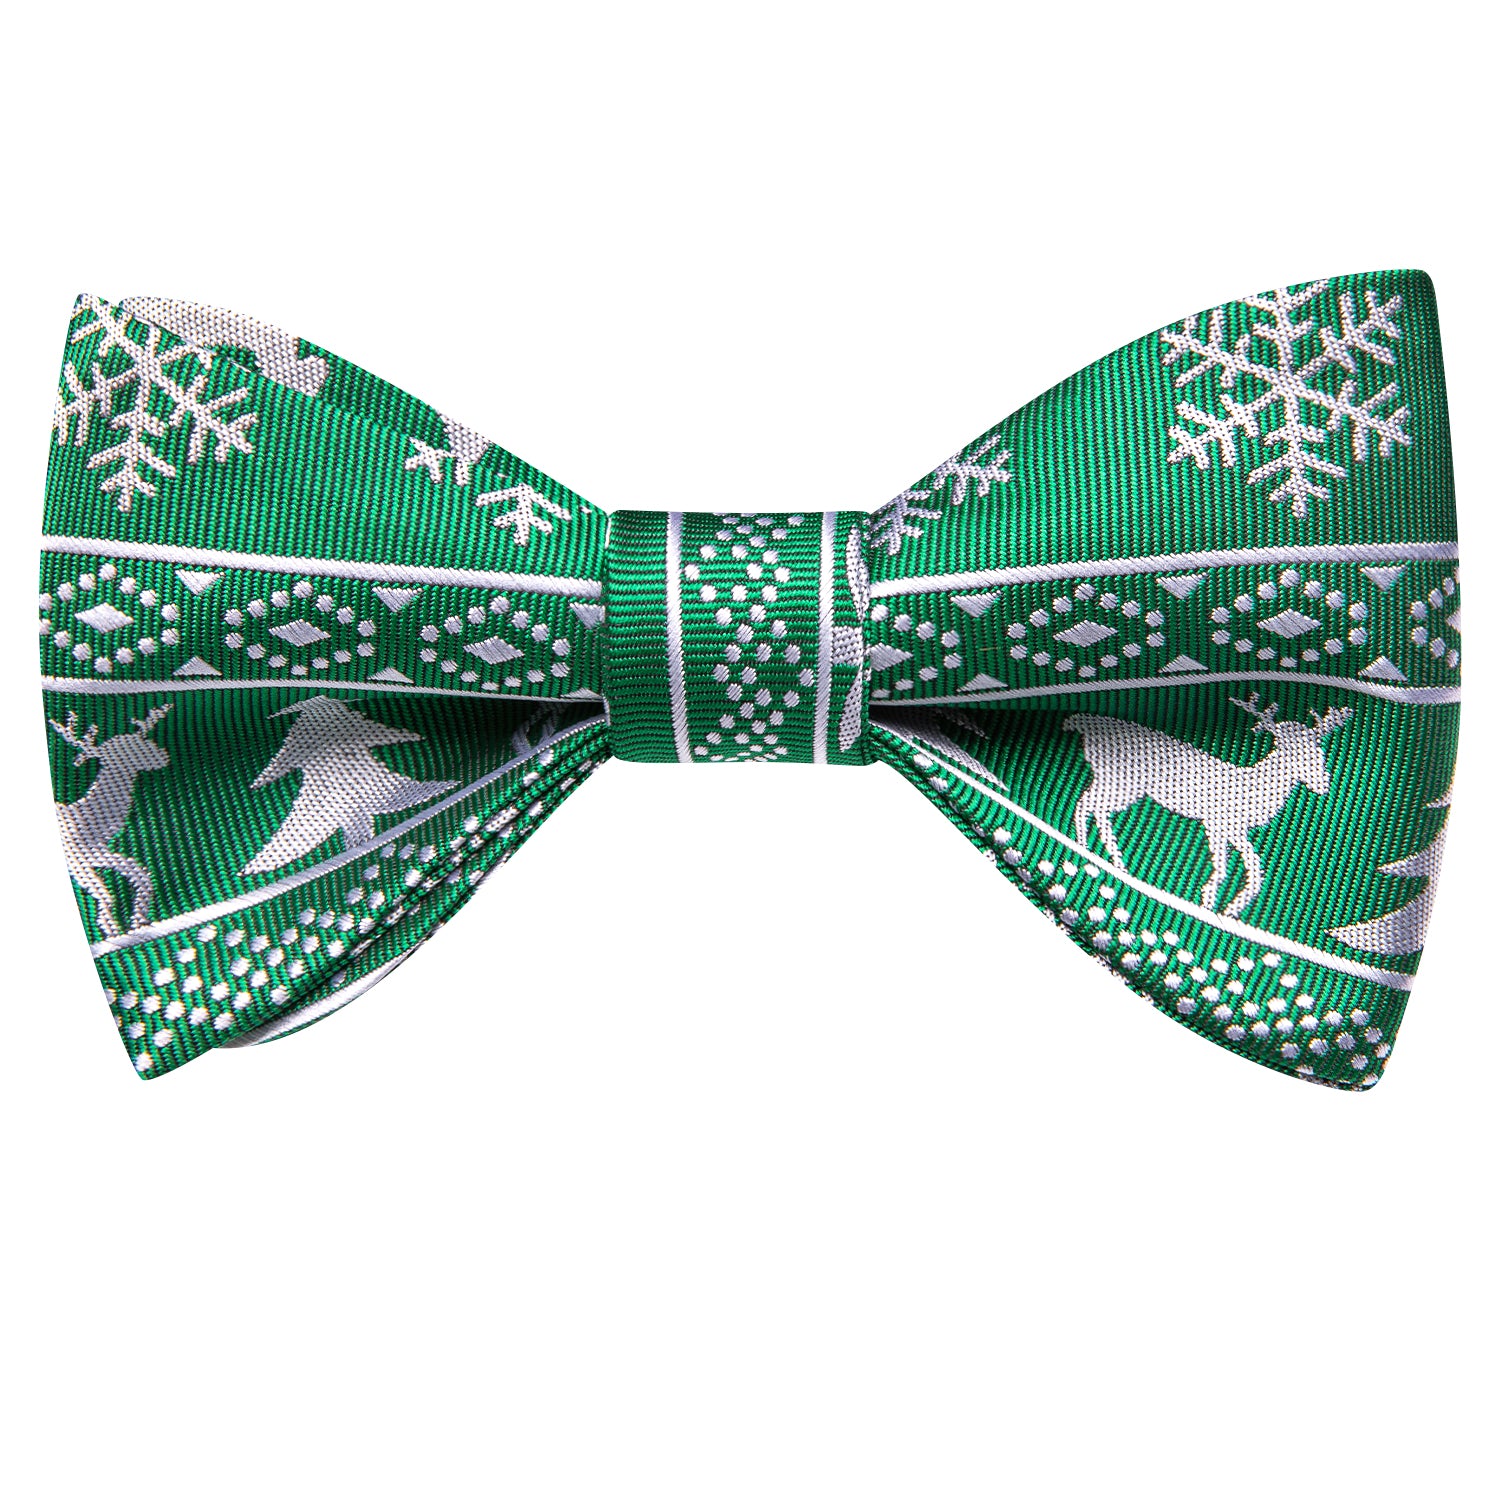 Green White Christmas Novelty Self-tied Bow Tie Hanky Cufflinks Set